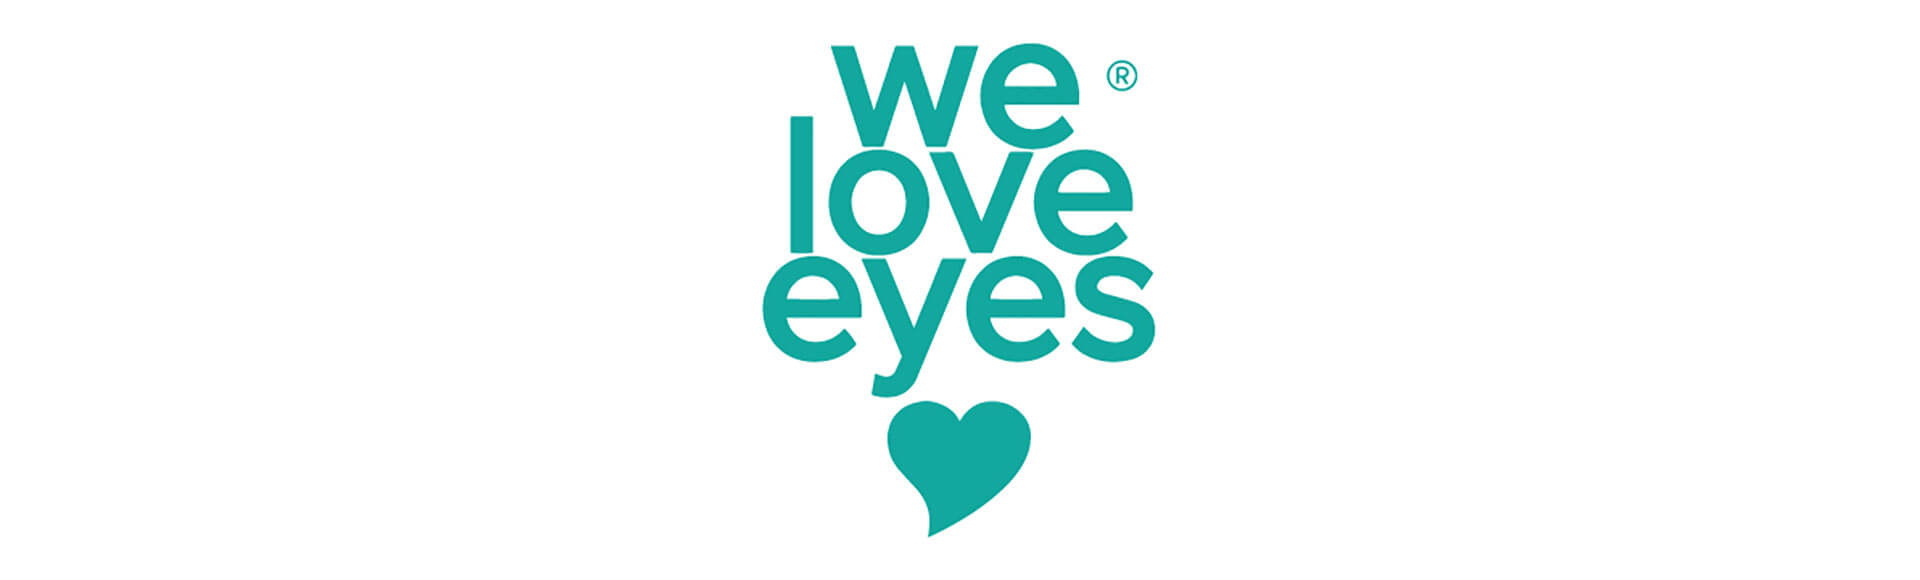 we-love-eyes